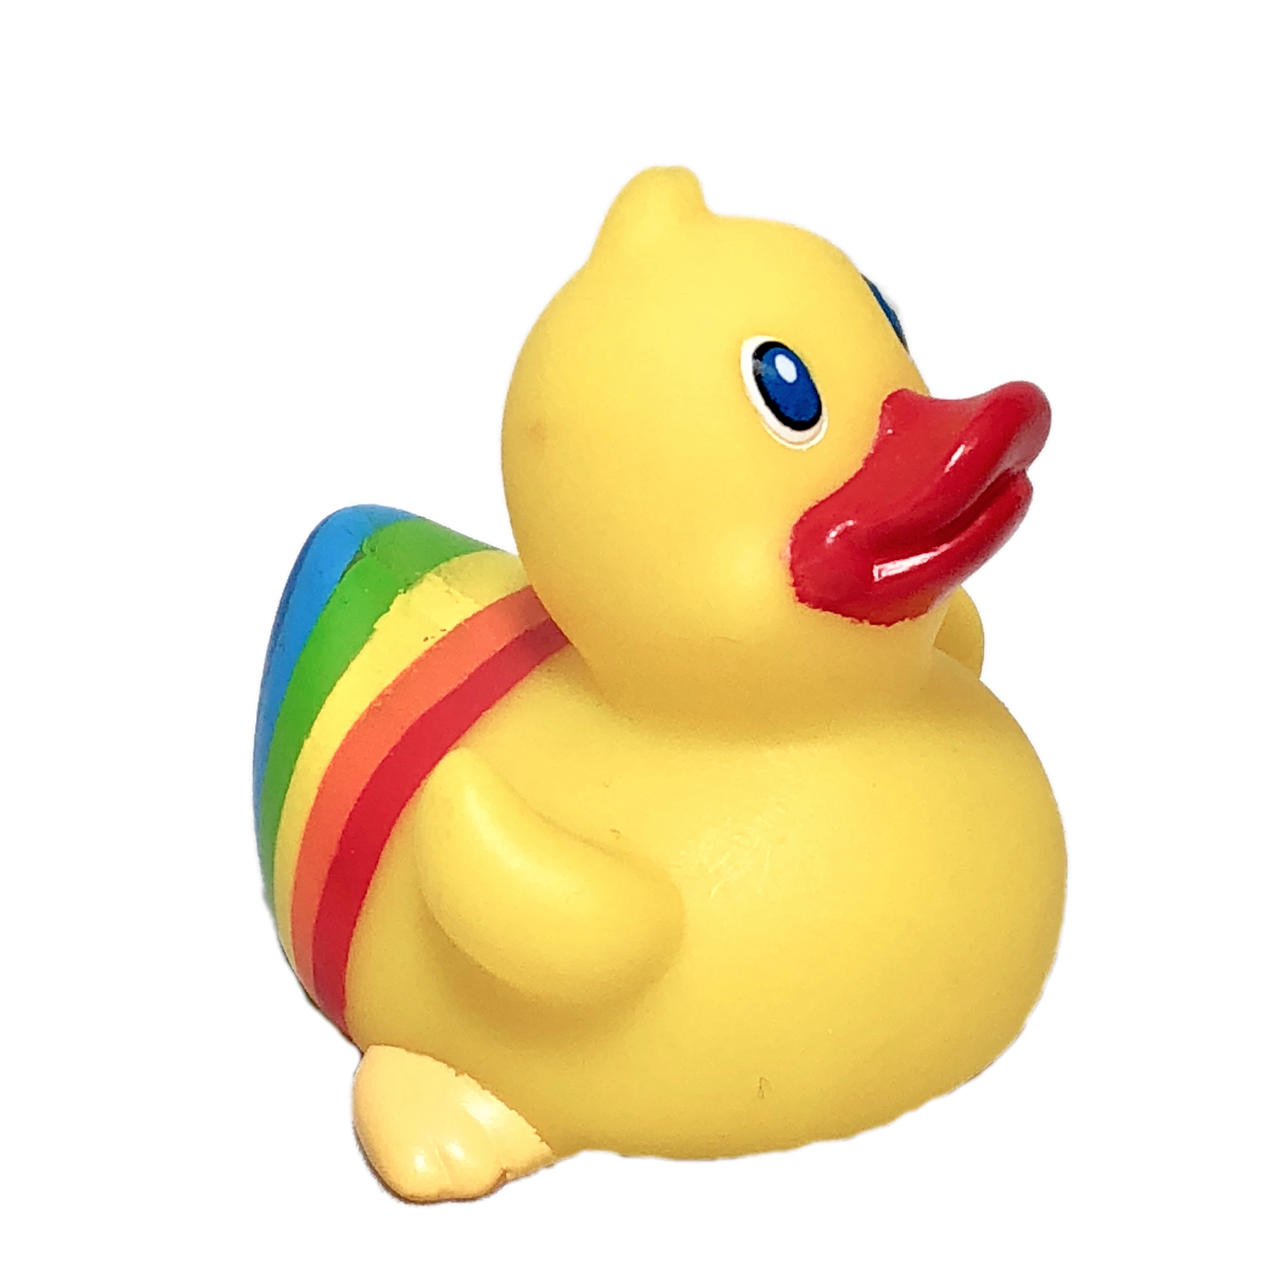 Download PNG image - Rubber Duck PNG Transparent Image 